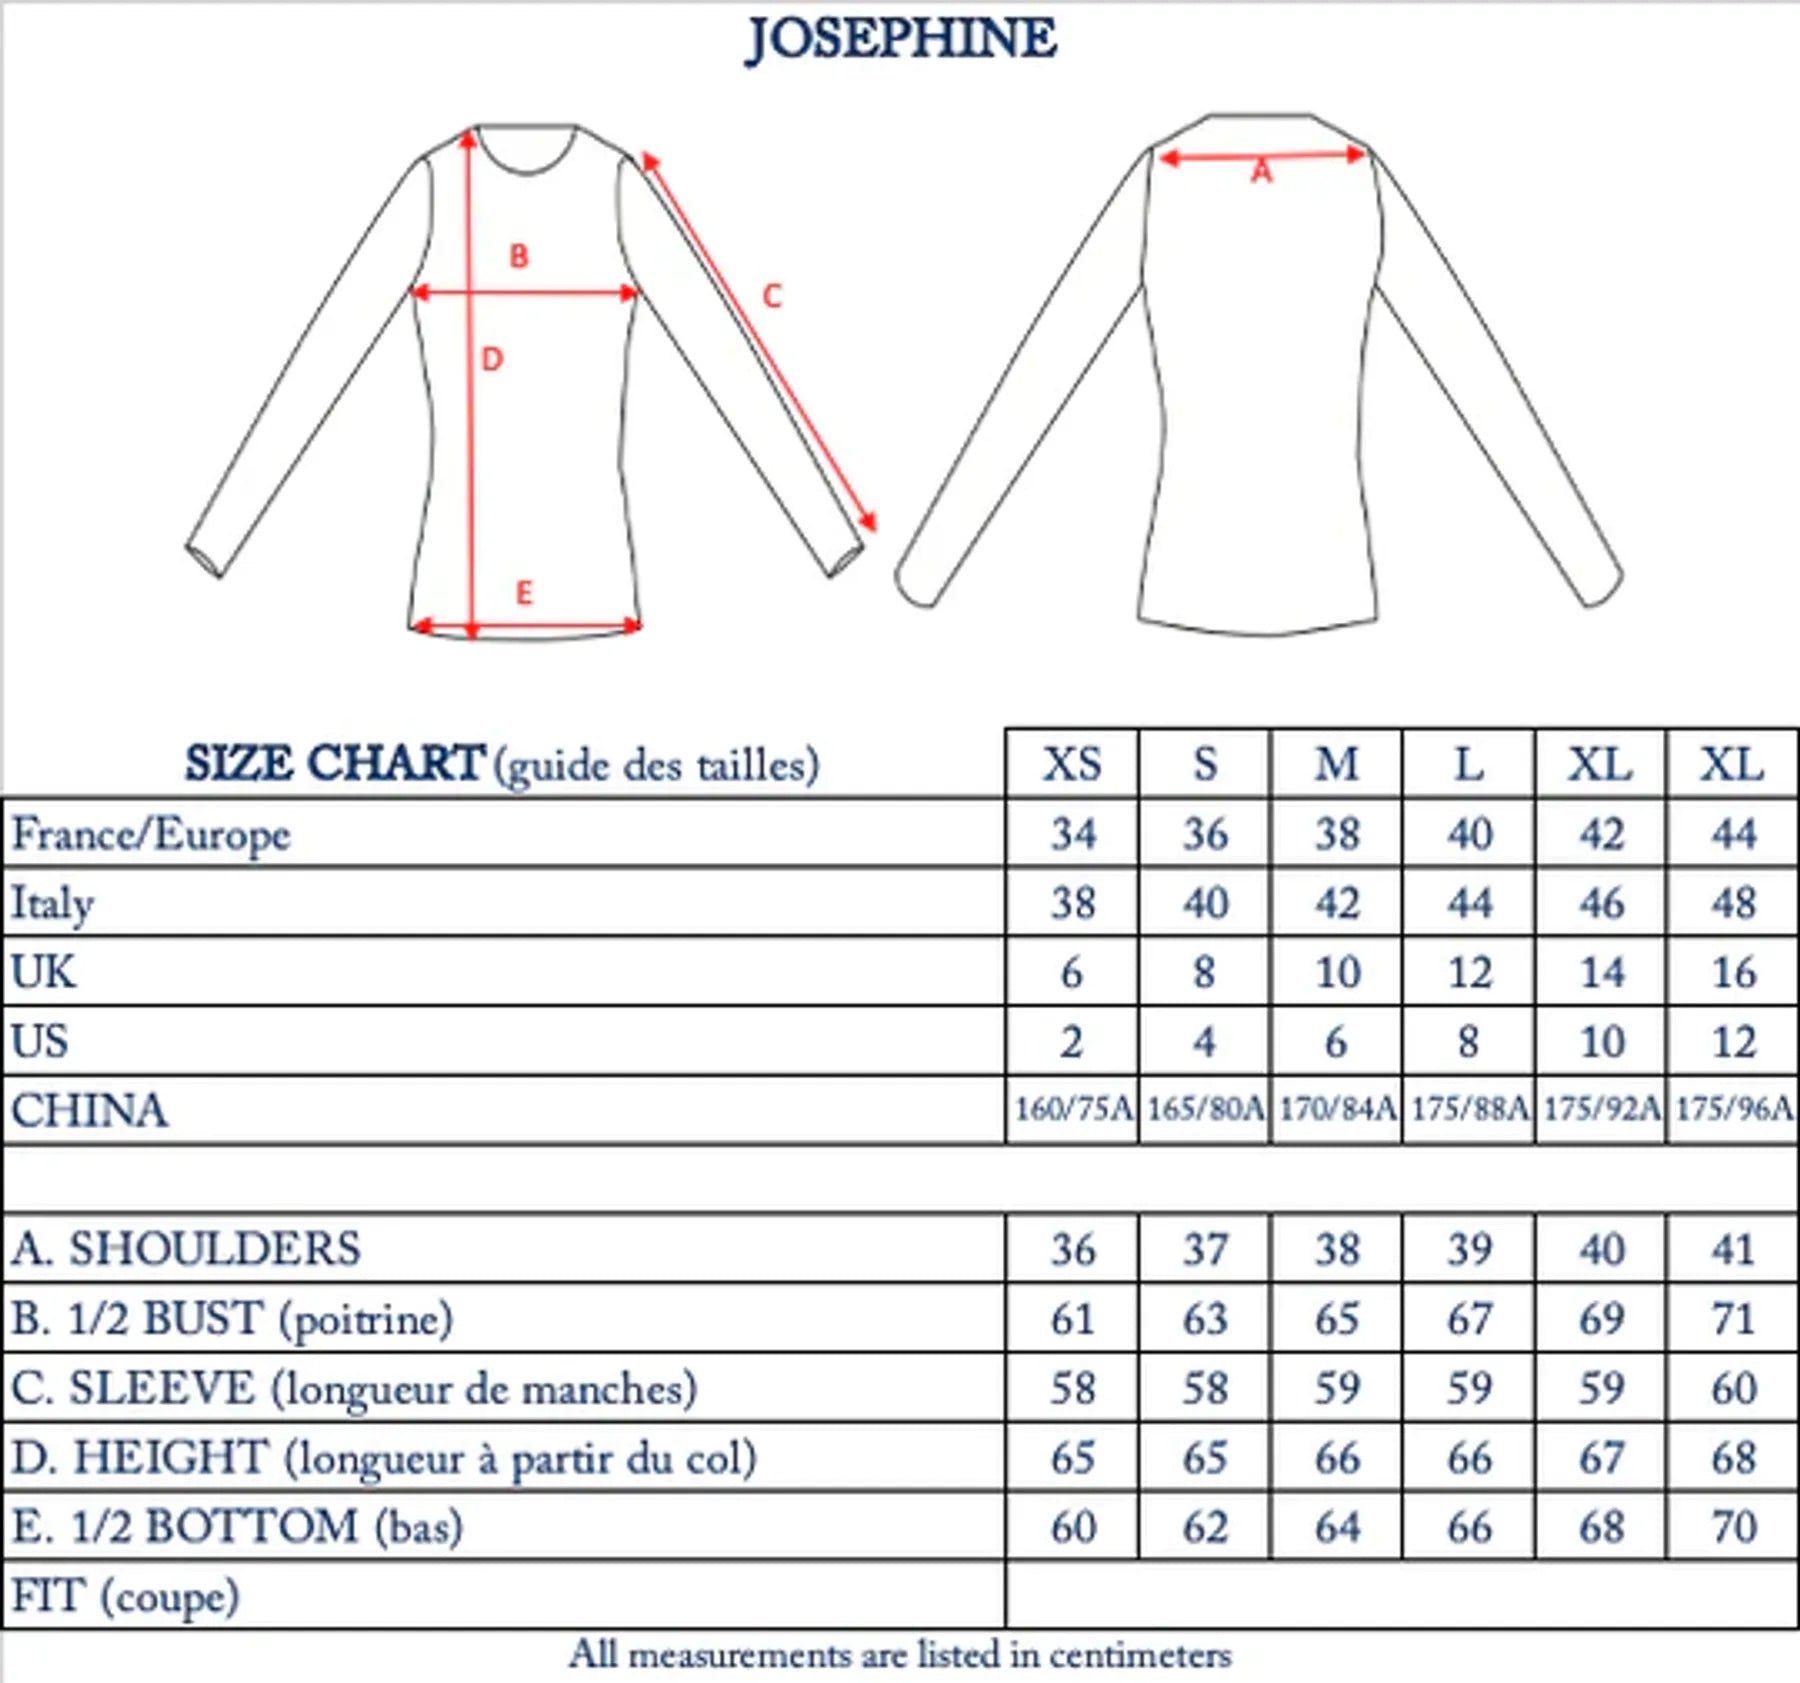 blouse-josephine-imprimee